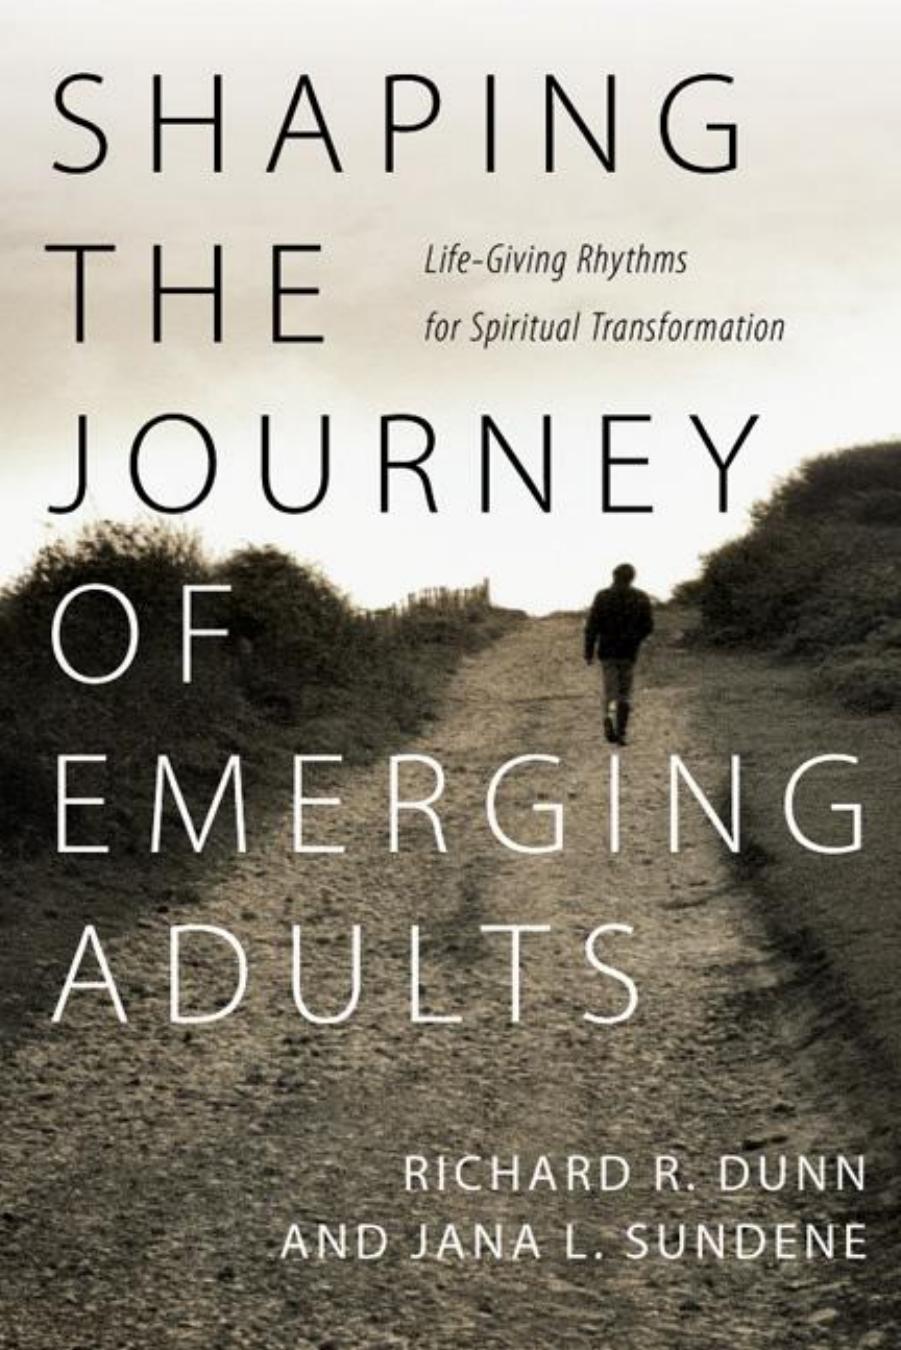 Shaping the Journey of Emerging Adults : Life-Giving Rhythms for Spiritual Transformation by Richard R. Dunn; Jana L. Sundene